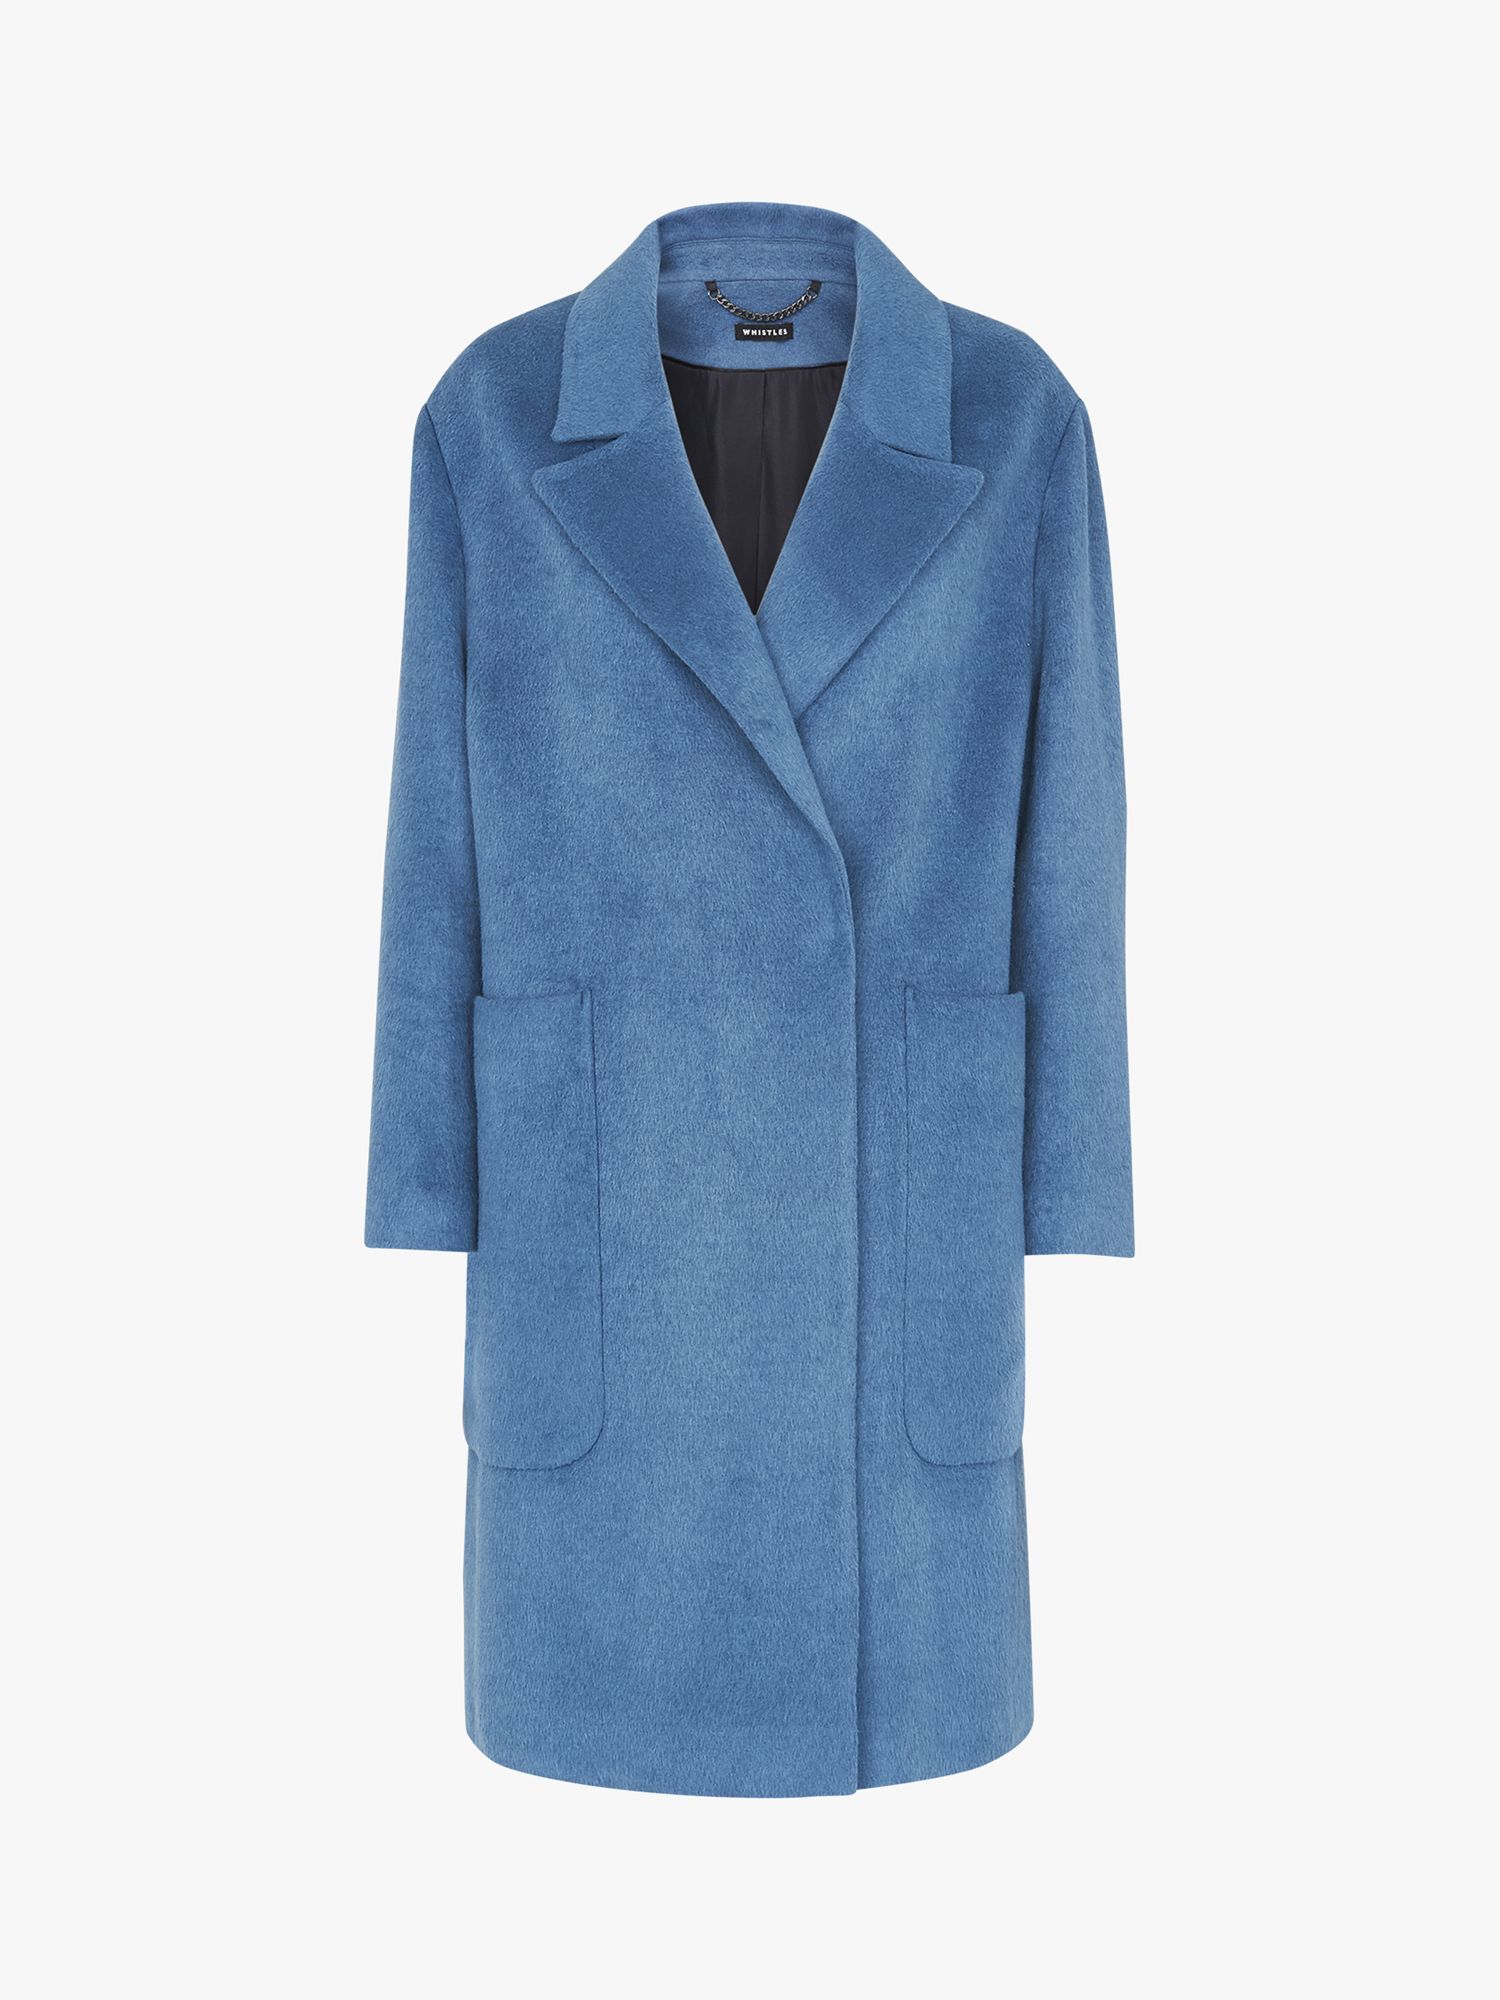 Whistles Lana Wool Blend Cocoon Coat, Blue at John Lewis & Partners